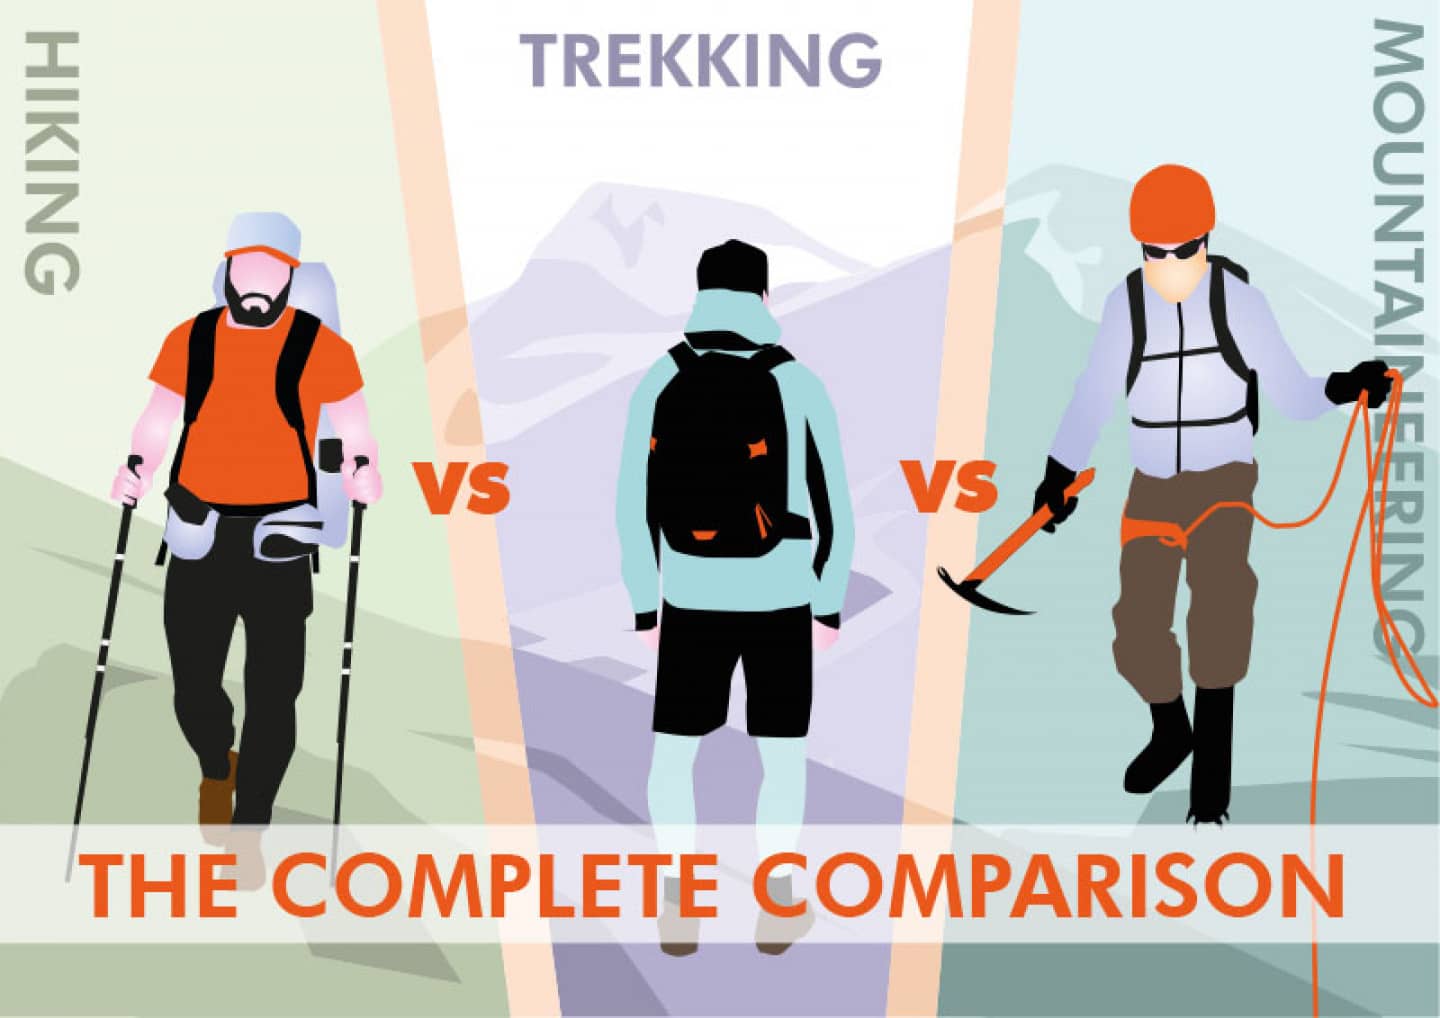 Hiking vs trekking vs mountaineering featured image